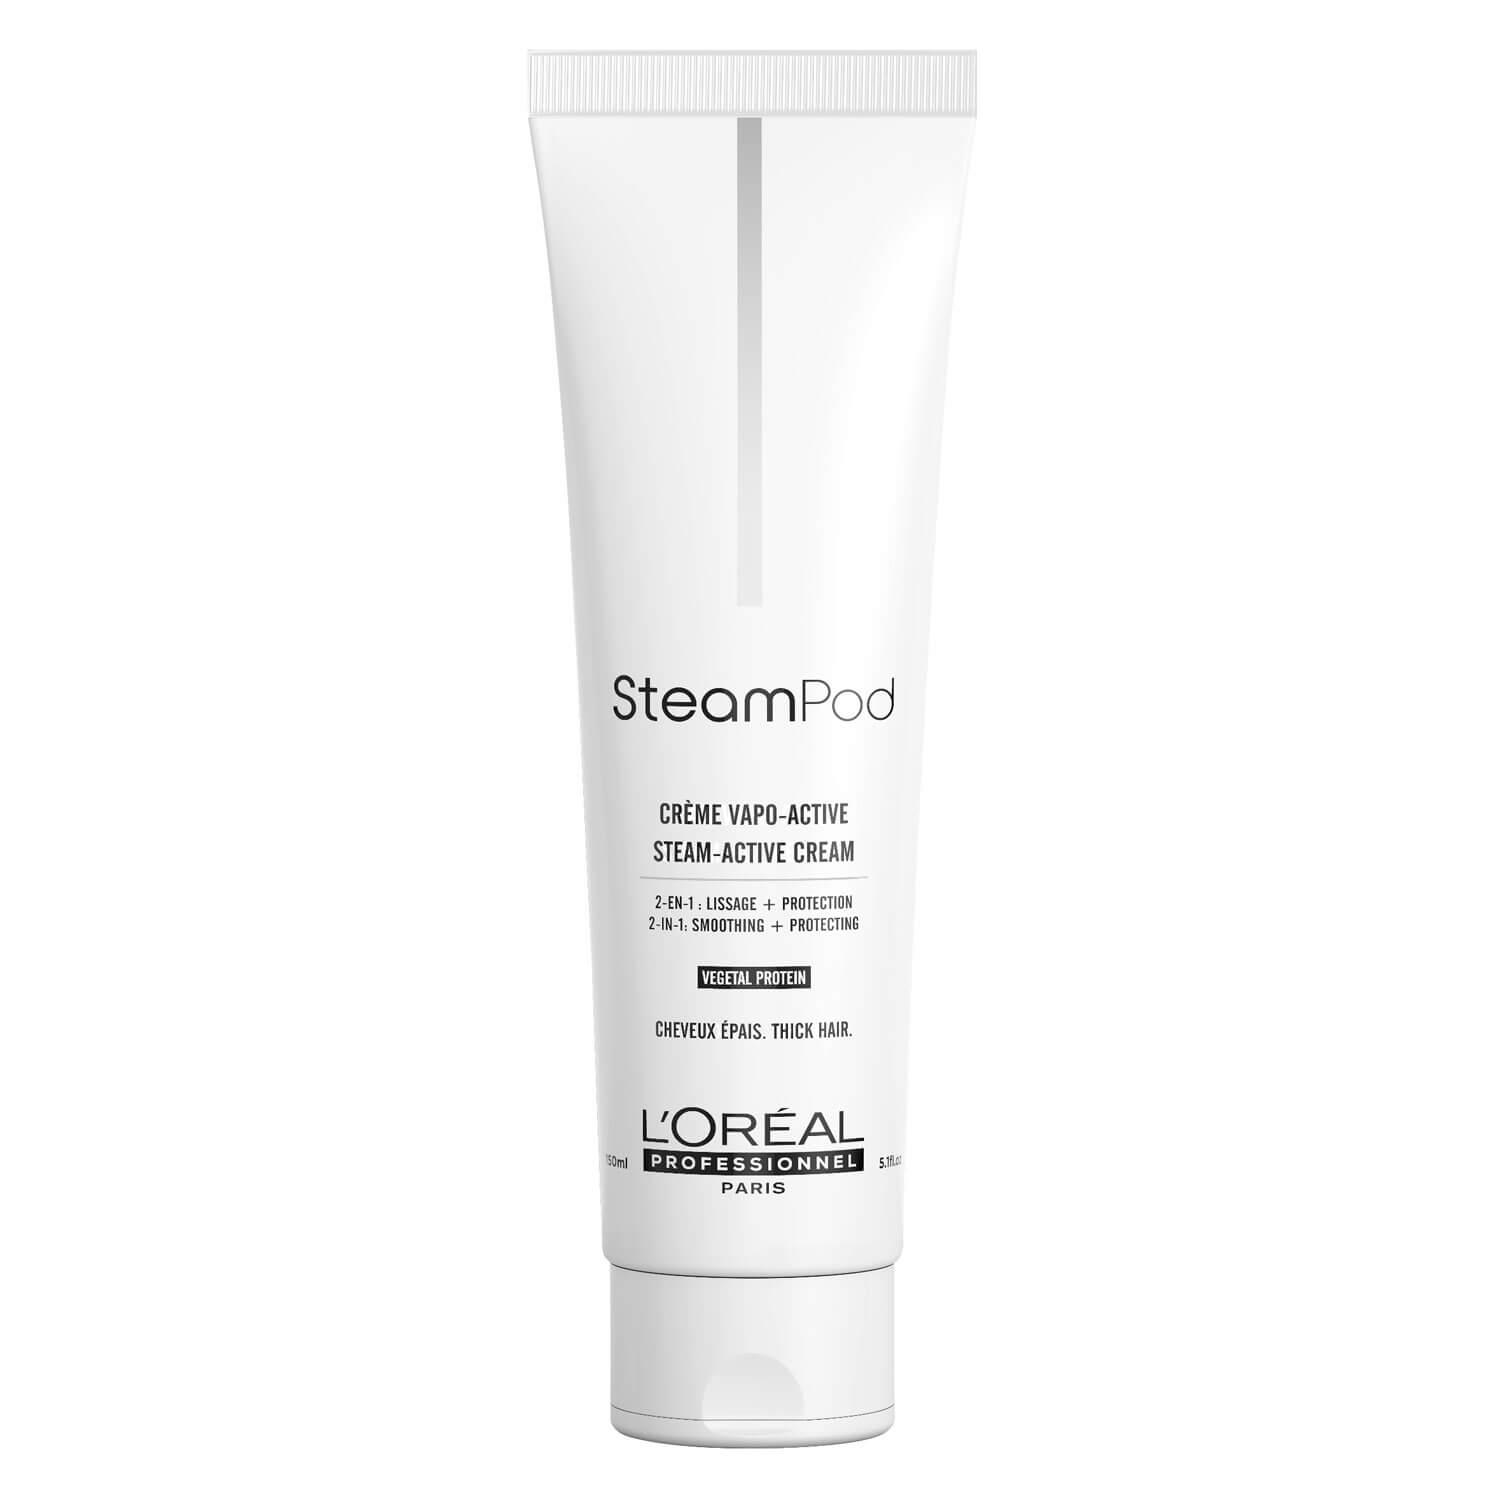 Steampod - Steam-Activated Cream dickes Haar